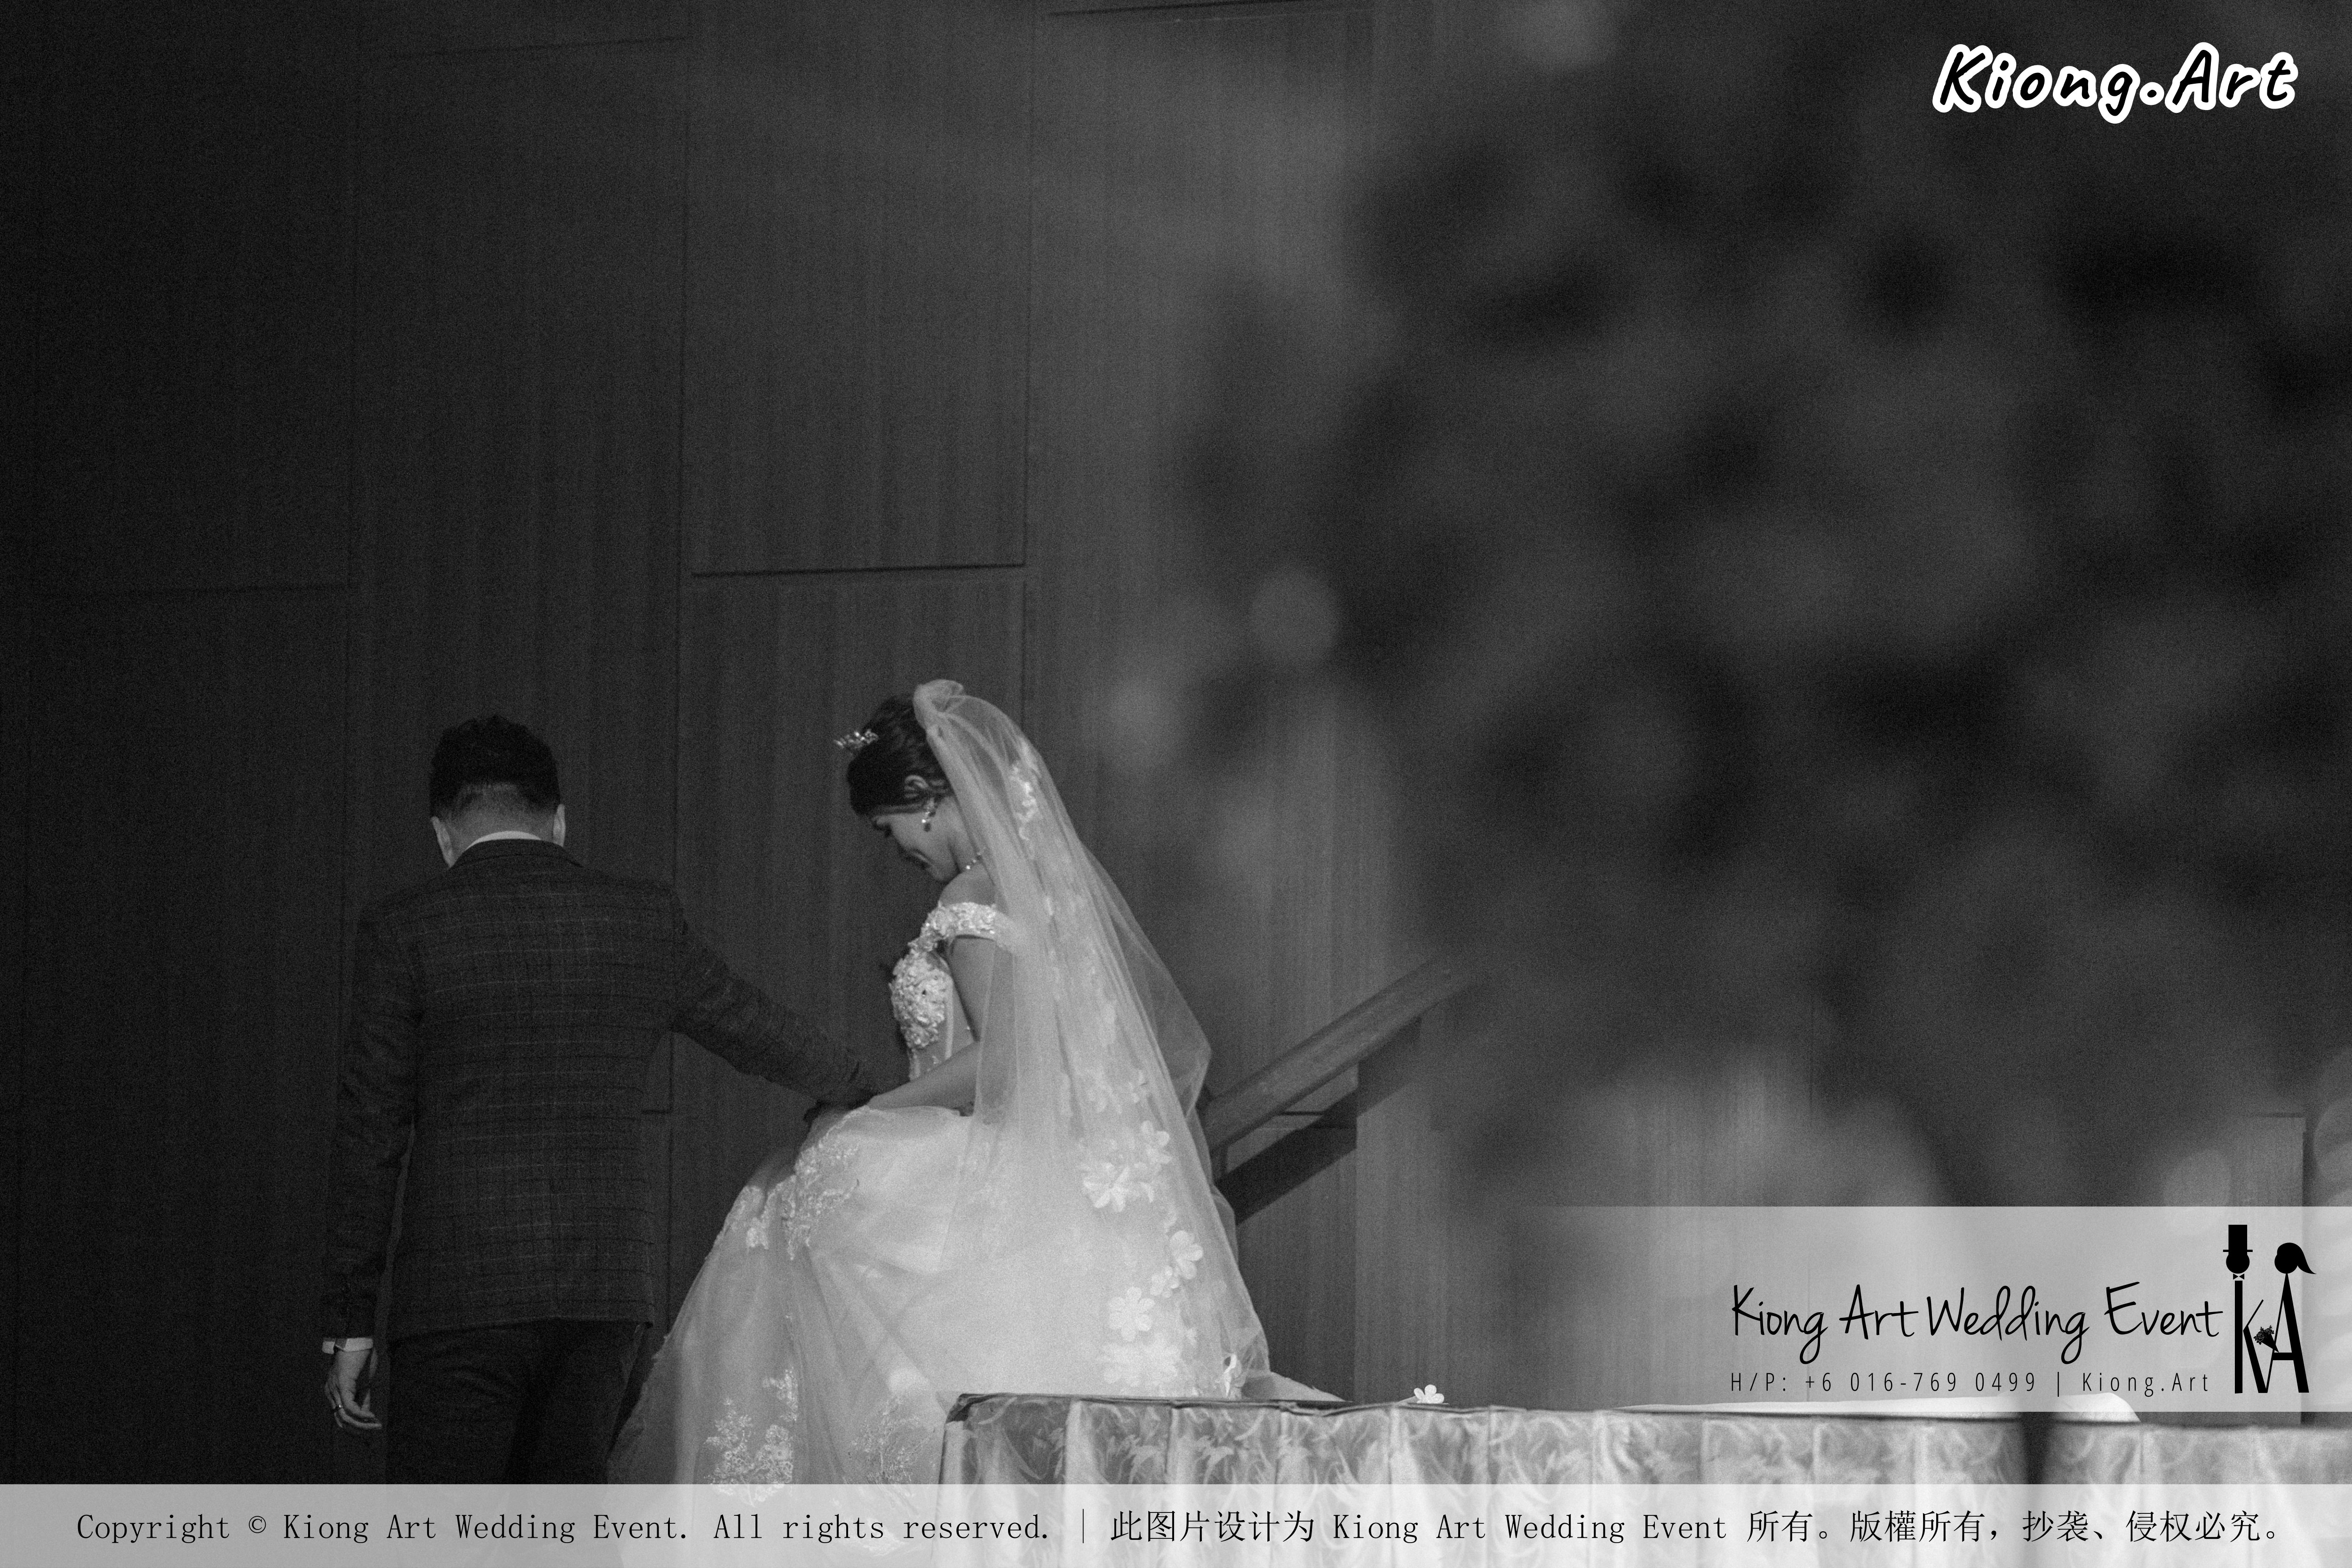 Kiong Art Wedding Event Kuala Lumpur Malaysia Event and Wedding DecorationCompany One-stop Wedding Planning Services Wedding Theme Live Band Wedding Photography Videography A03-78